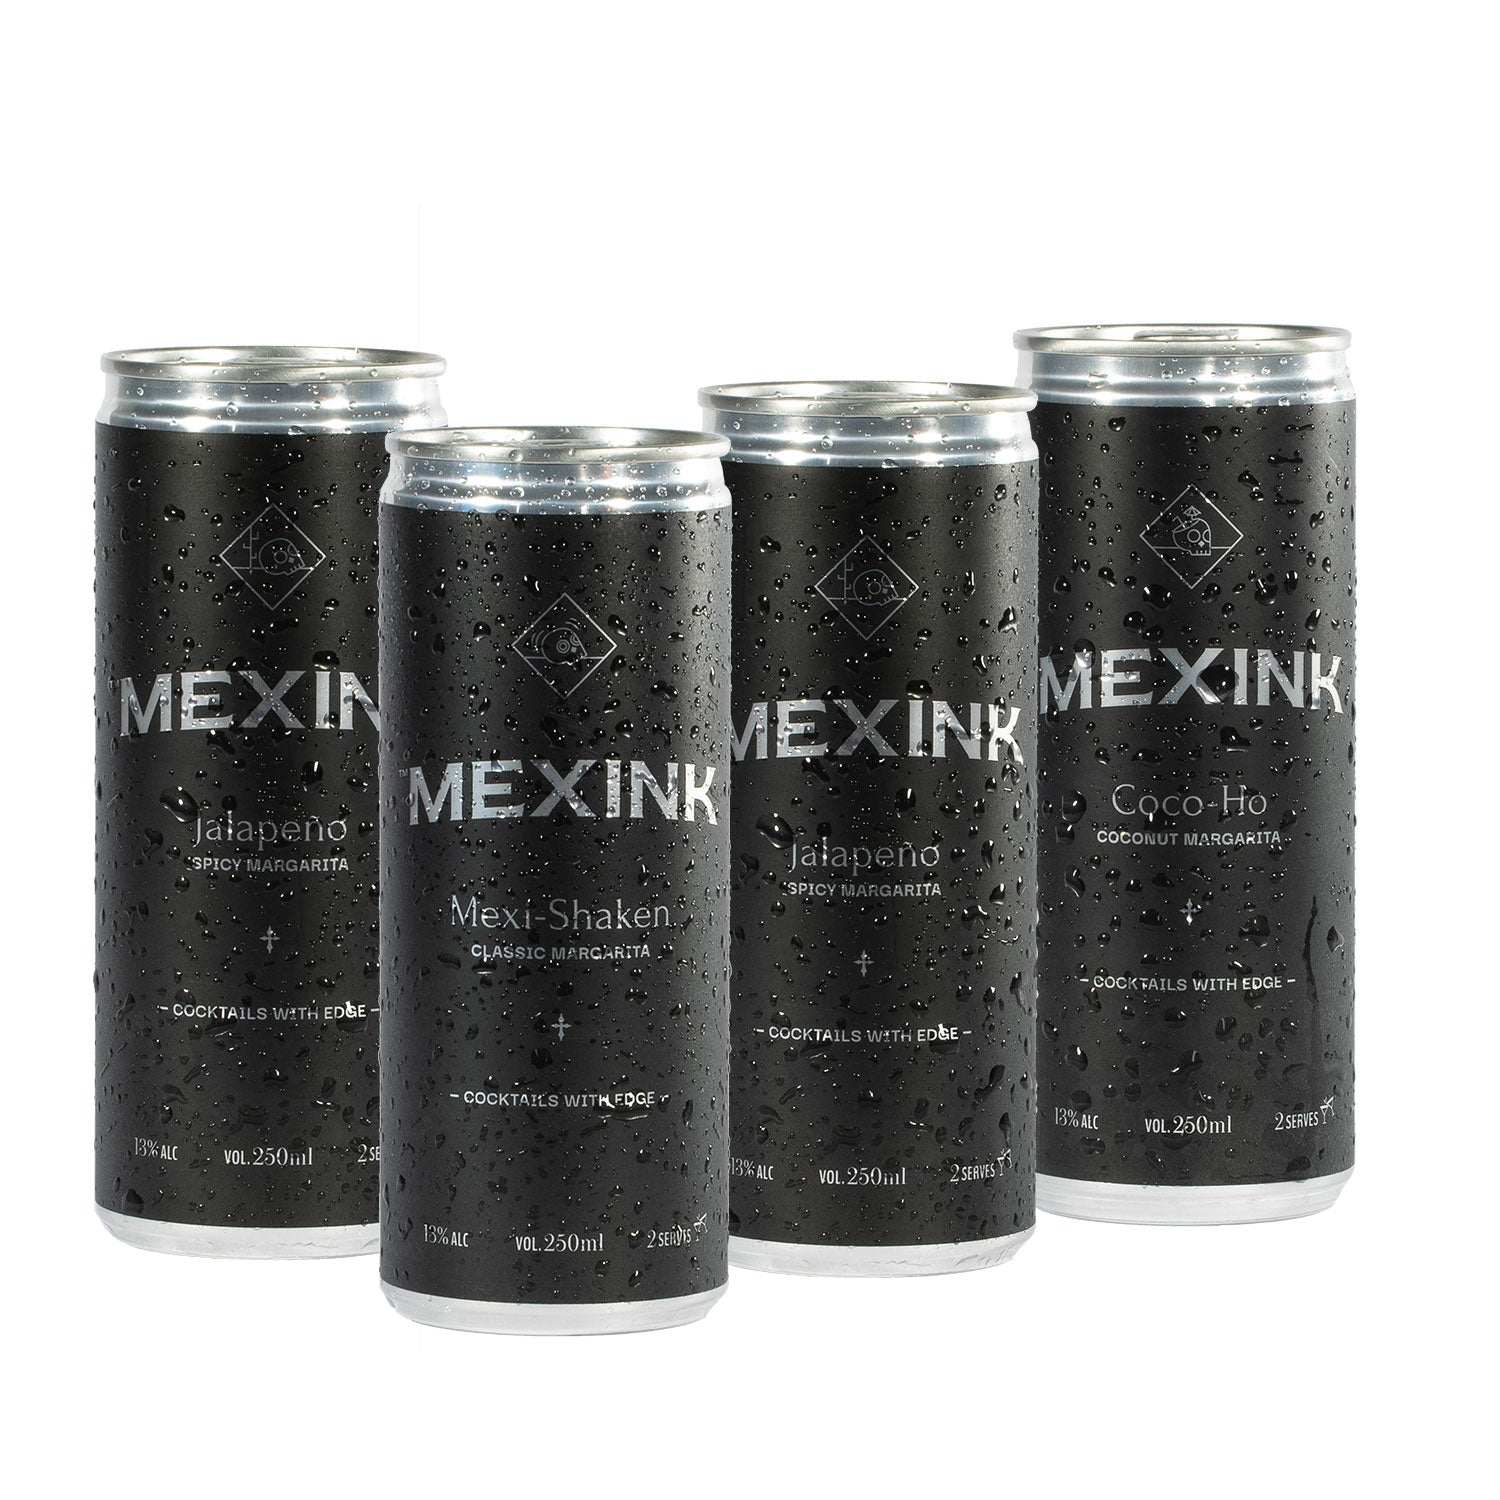 Mexink Mixed 4 Pack Margarita